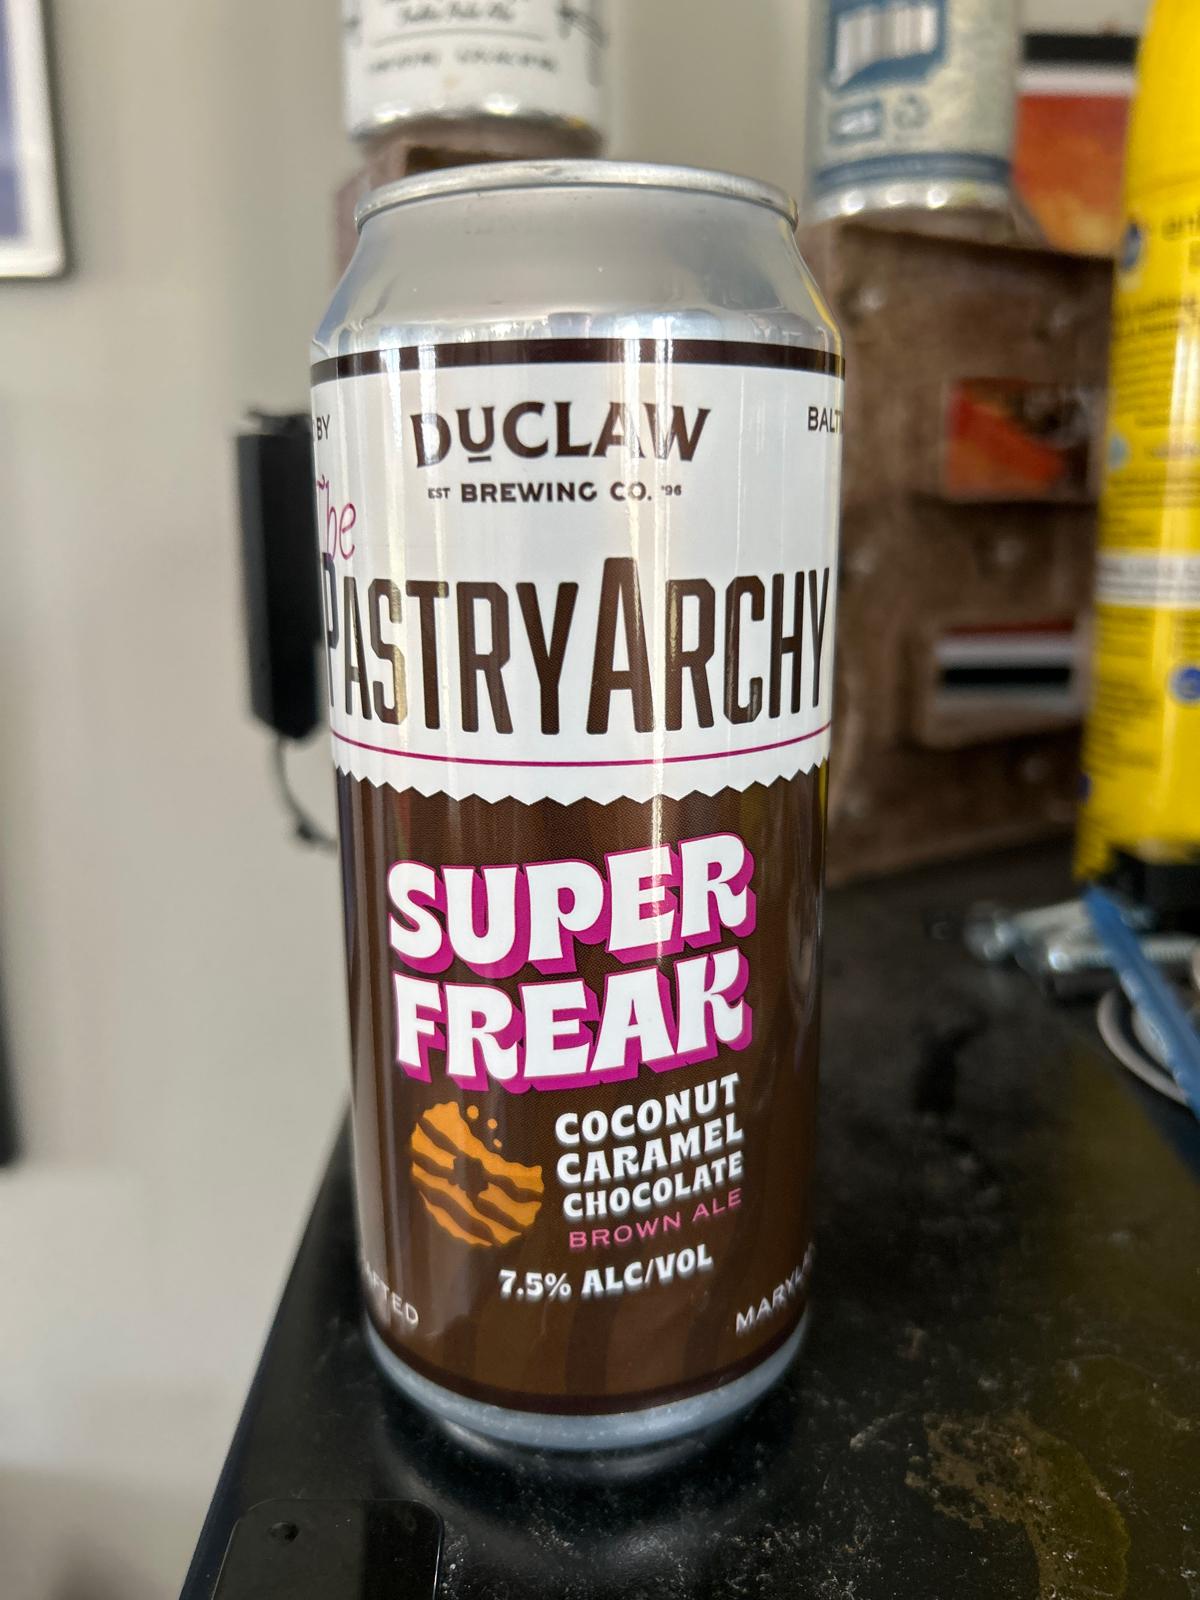 The PastryArchy: Super Freak